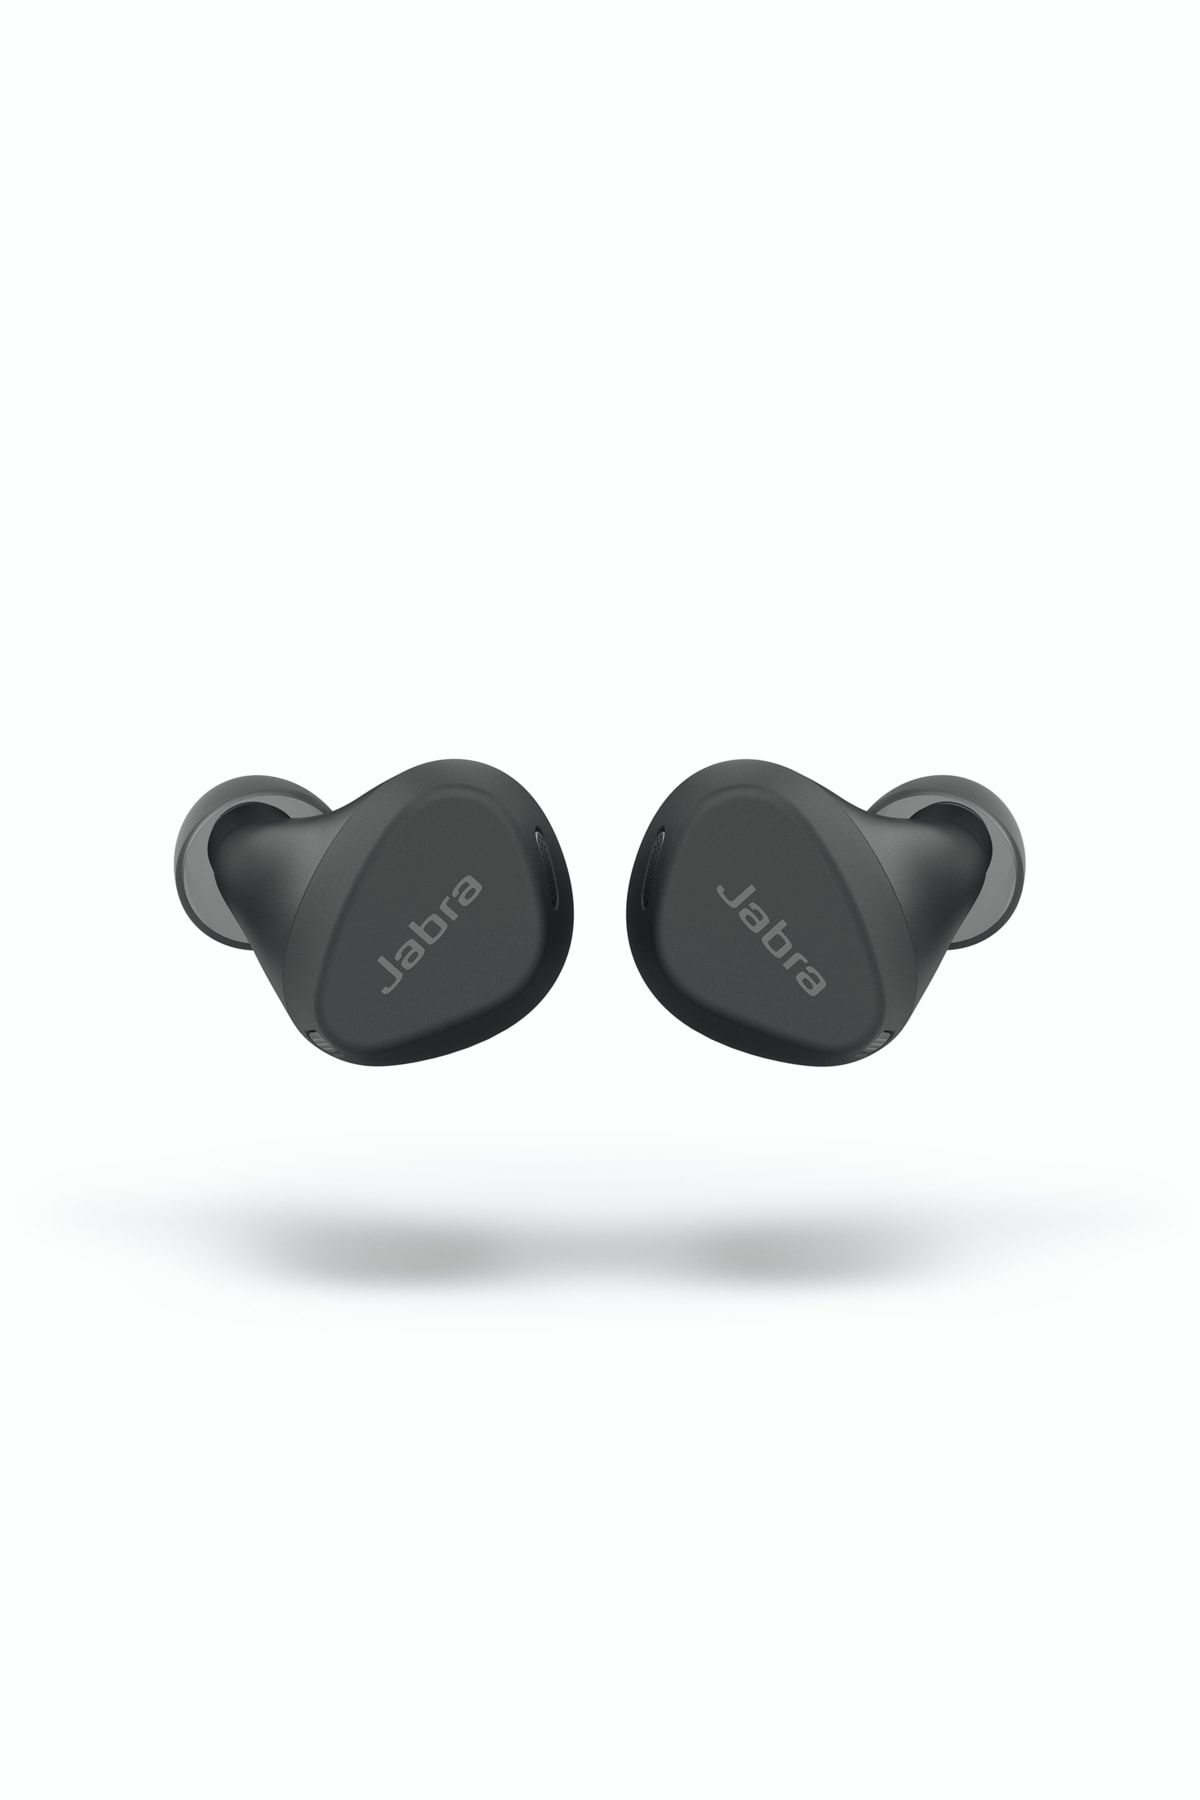 Jabra Elite 4 Active Ip57 Sertifikalı Kulak Içi Spor Bluetooth Kulaklık - Siyah